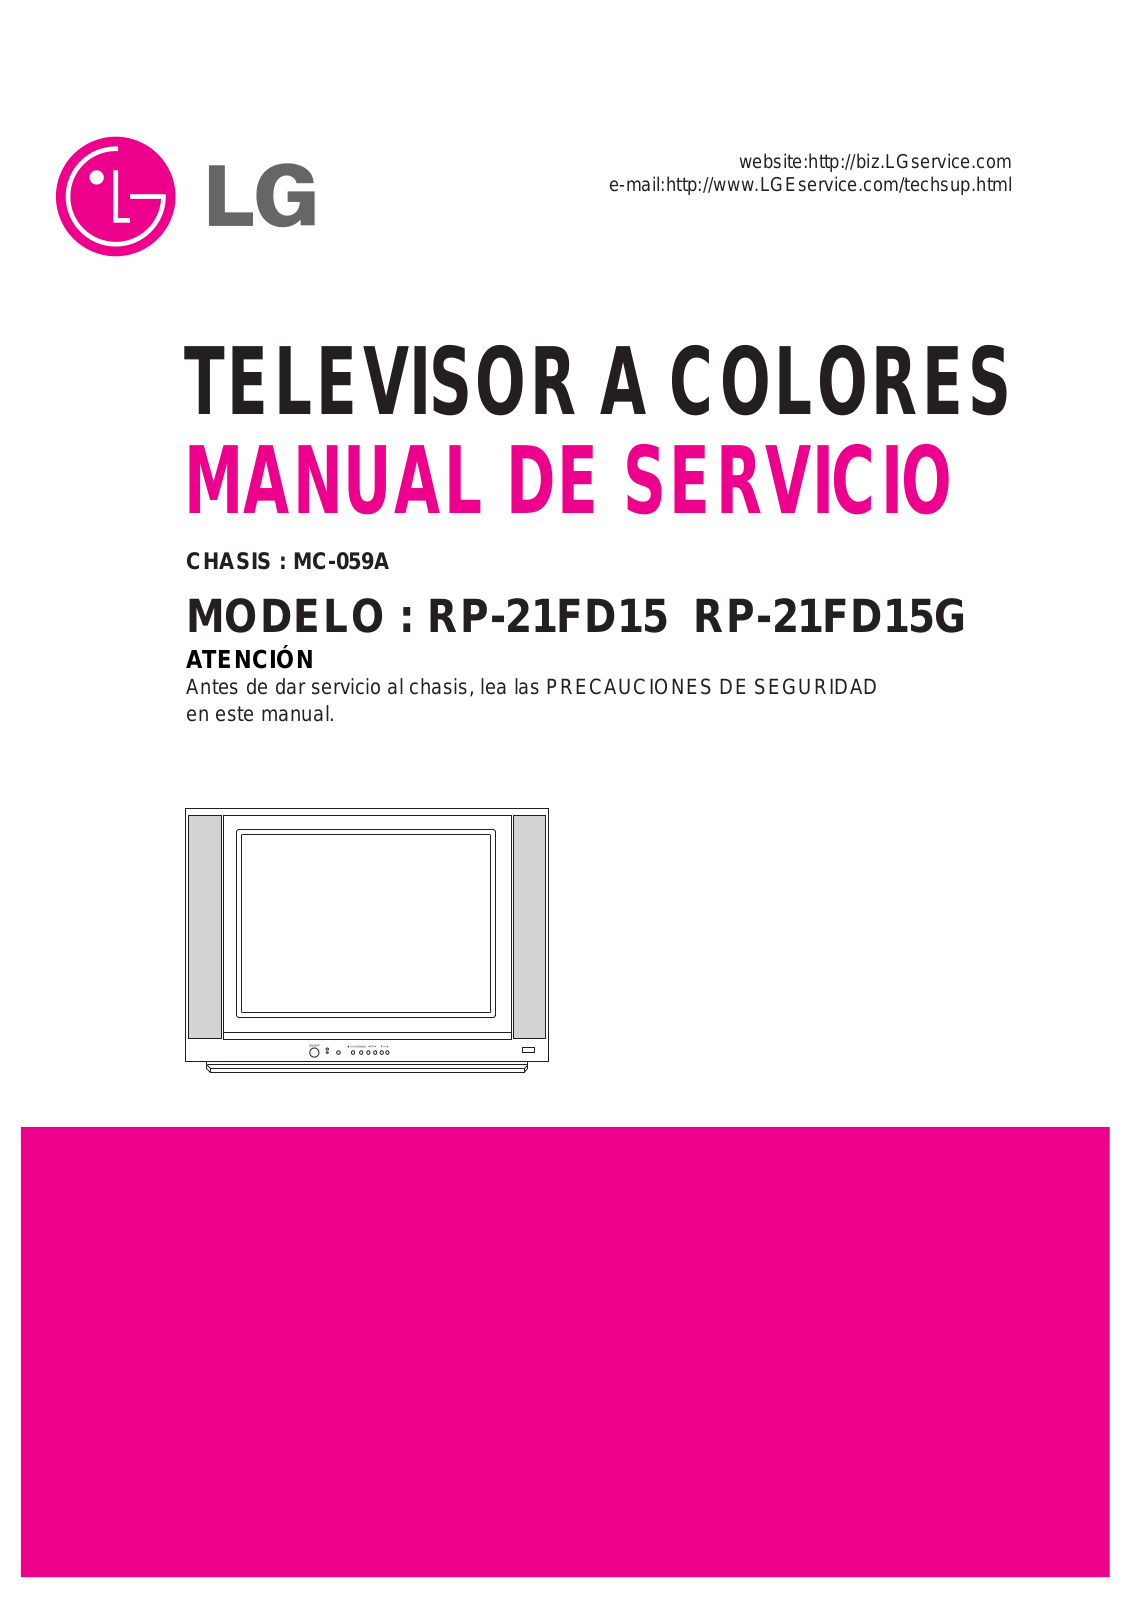 LG RP-15-21FD15 Service Manual